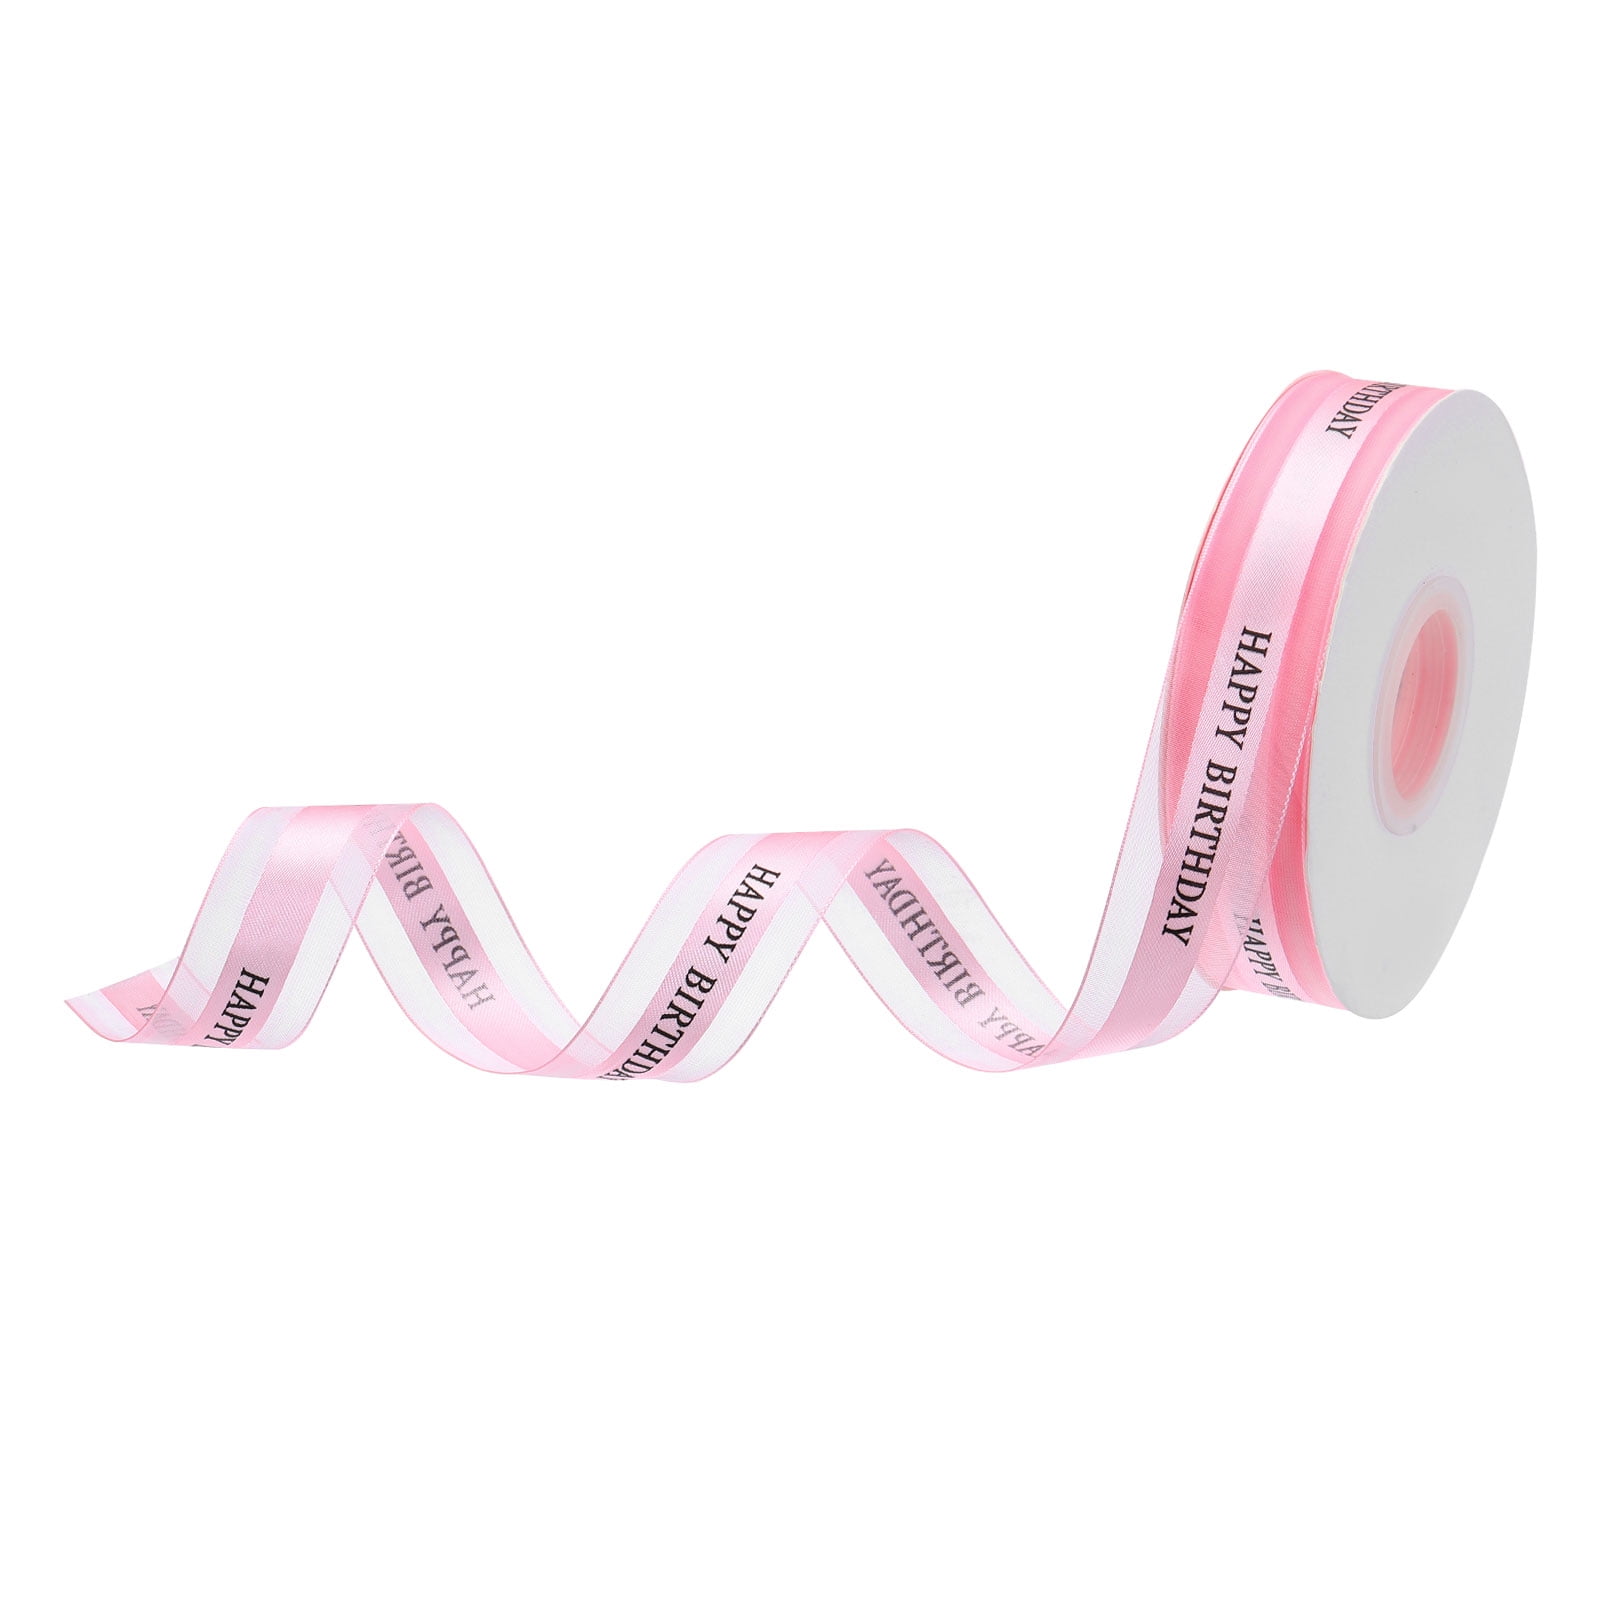 Offray Ribbon, Shocking Pink 1 1/2 inch Grosgrain Polyester Ribbon, 12 feet  